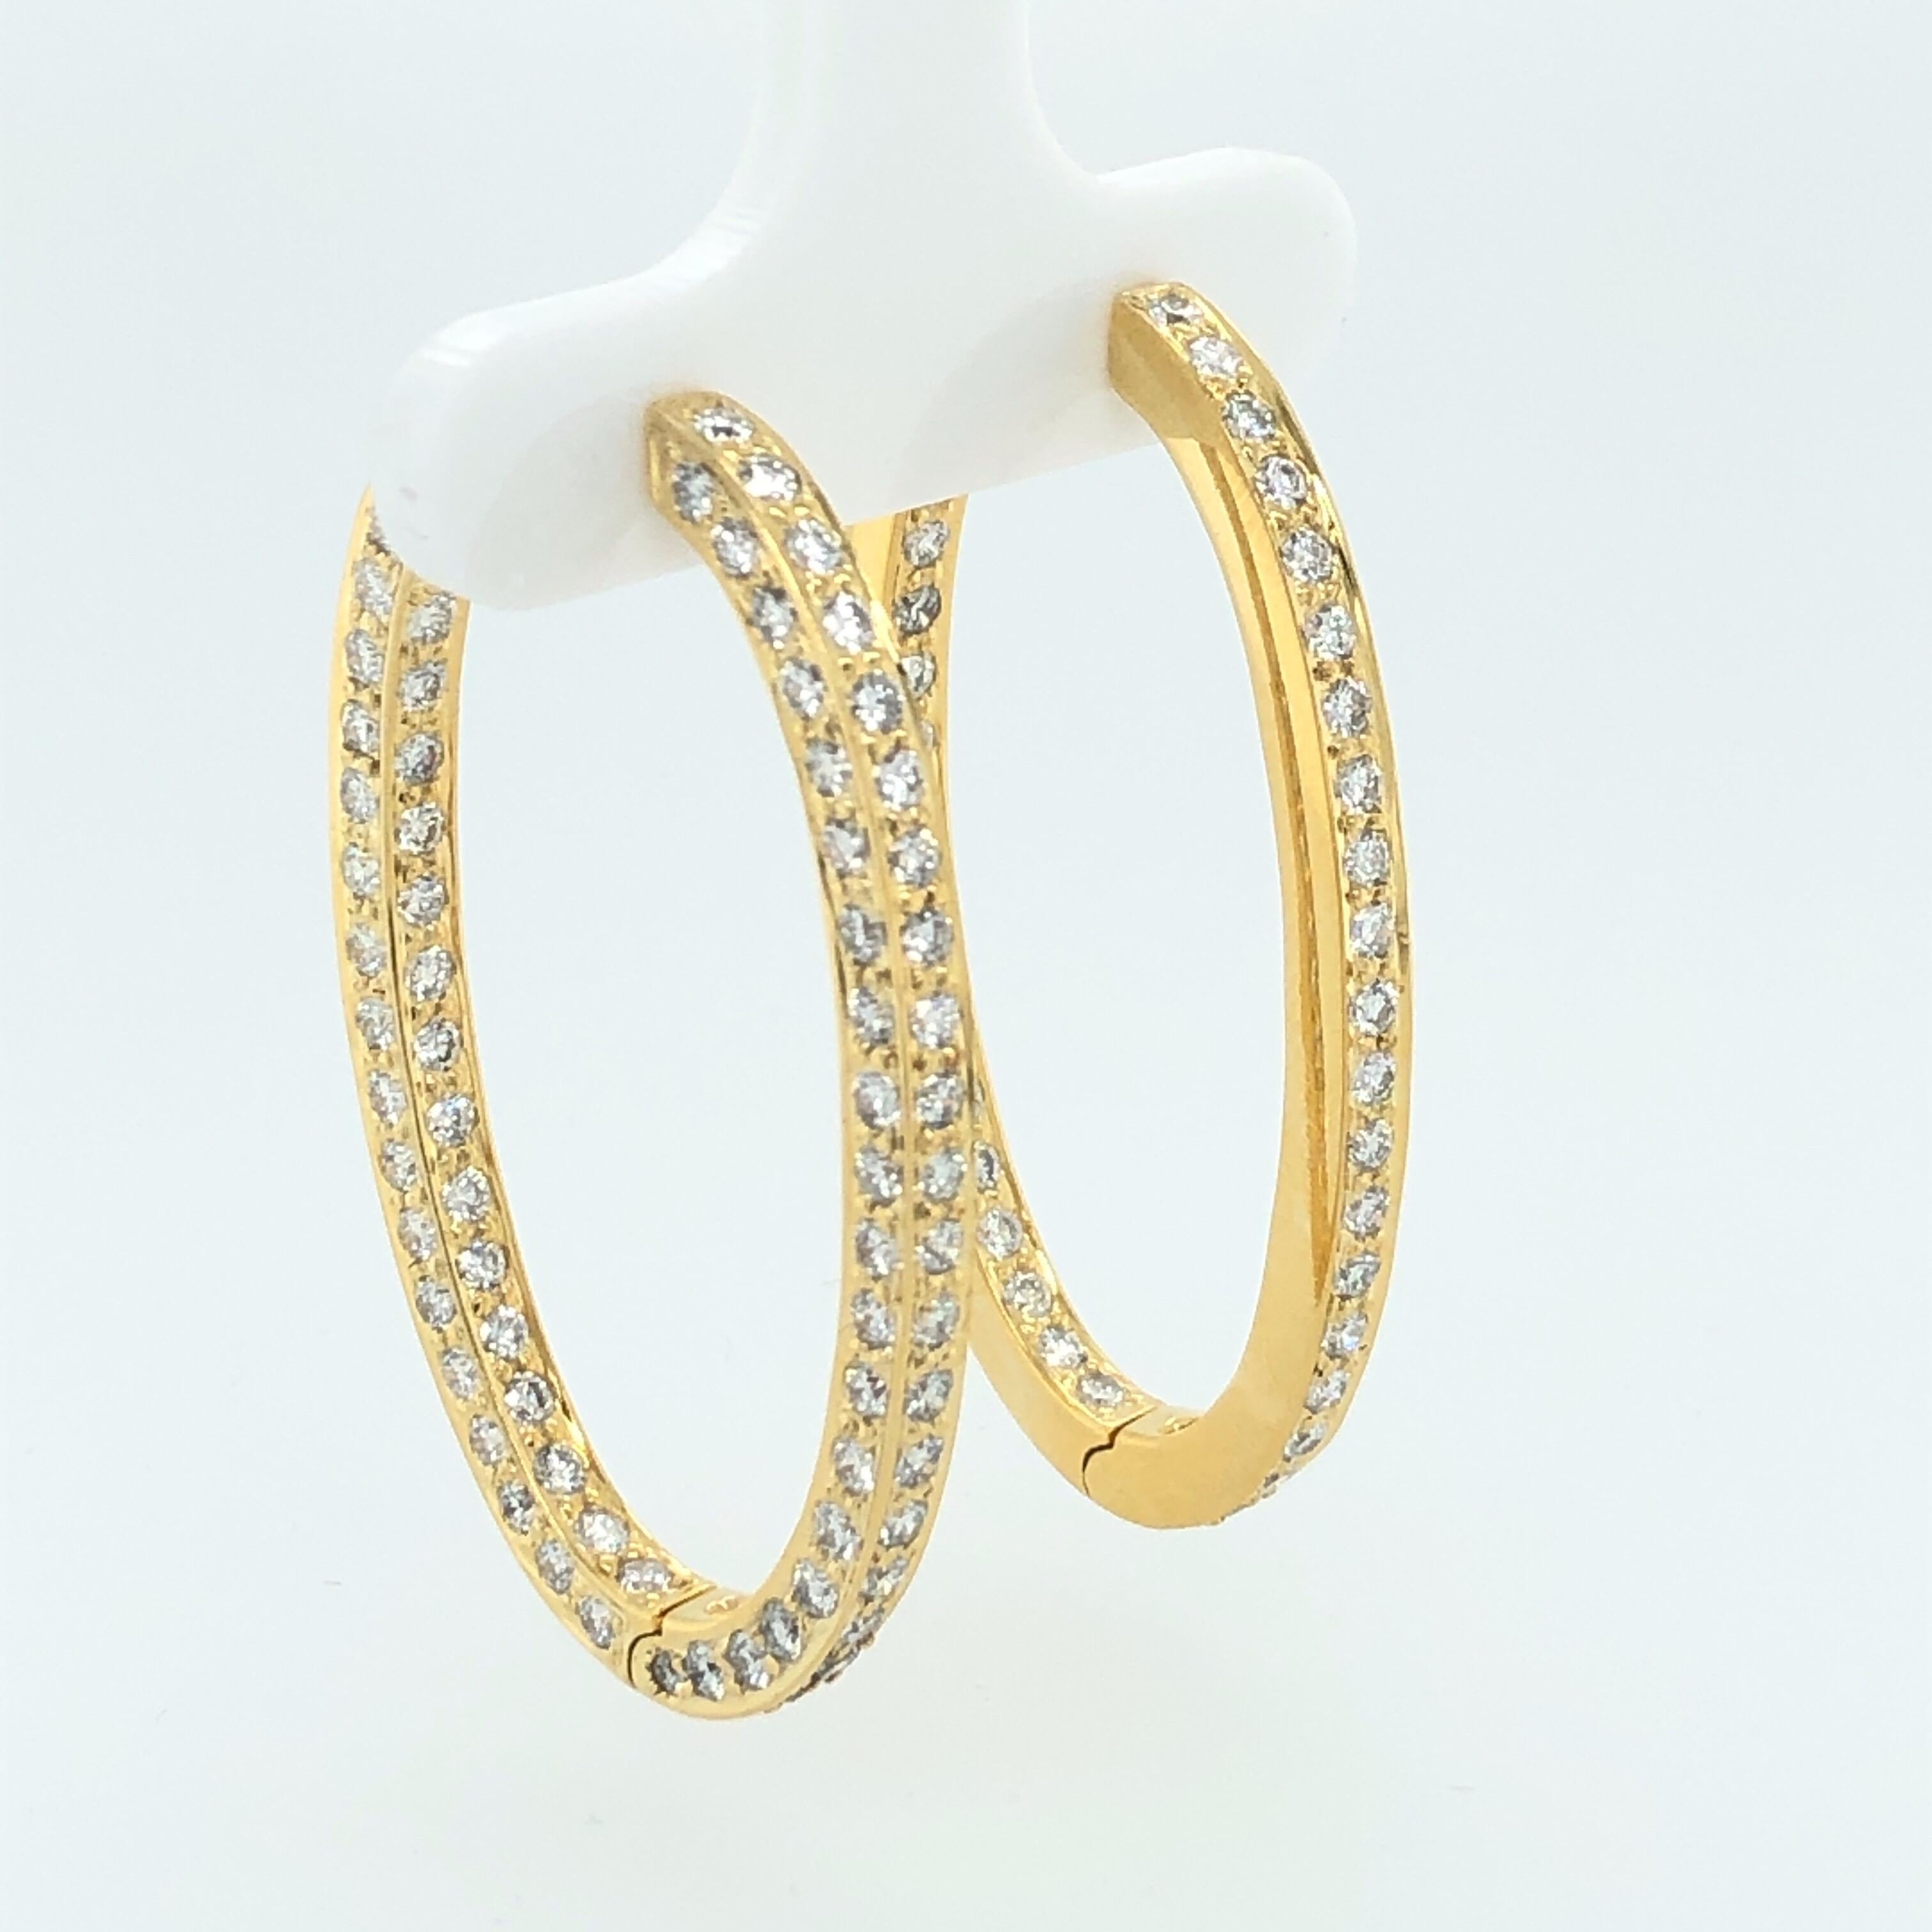 Phenomenal 18K yellow Gold 2.09 CTW Round Diamond Horseshoe Hoop Earrings from Award Winning Designer, Jye's International.  These stunning earrings are beyond gorgeous.  G-H V/S 1
